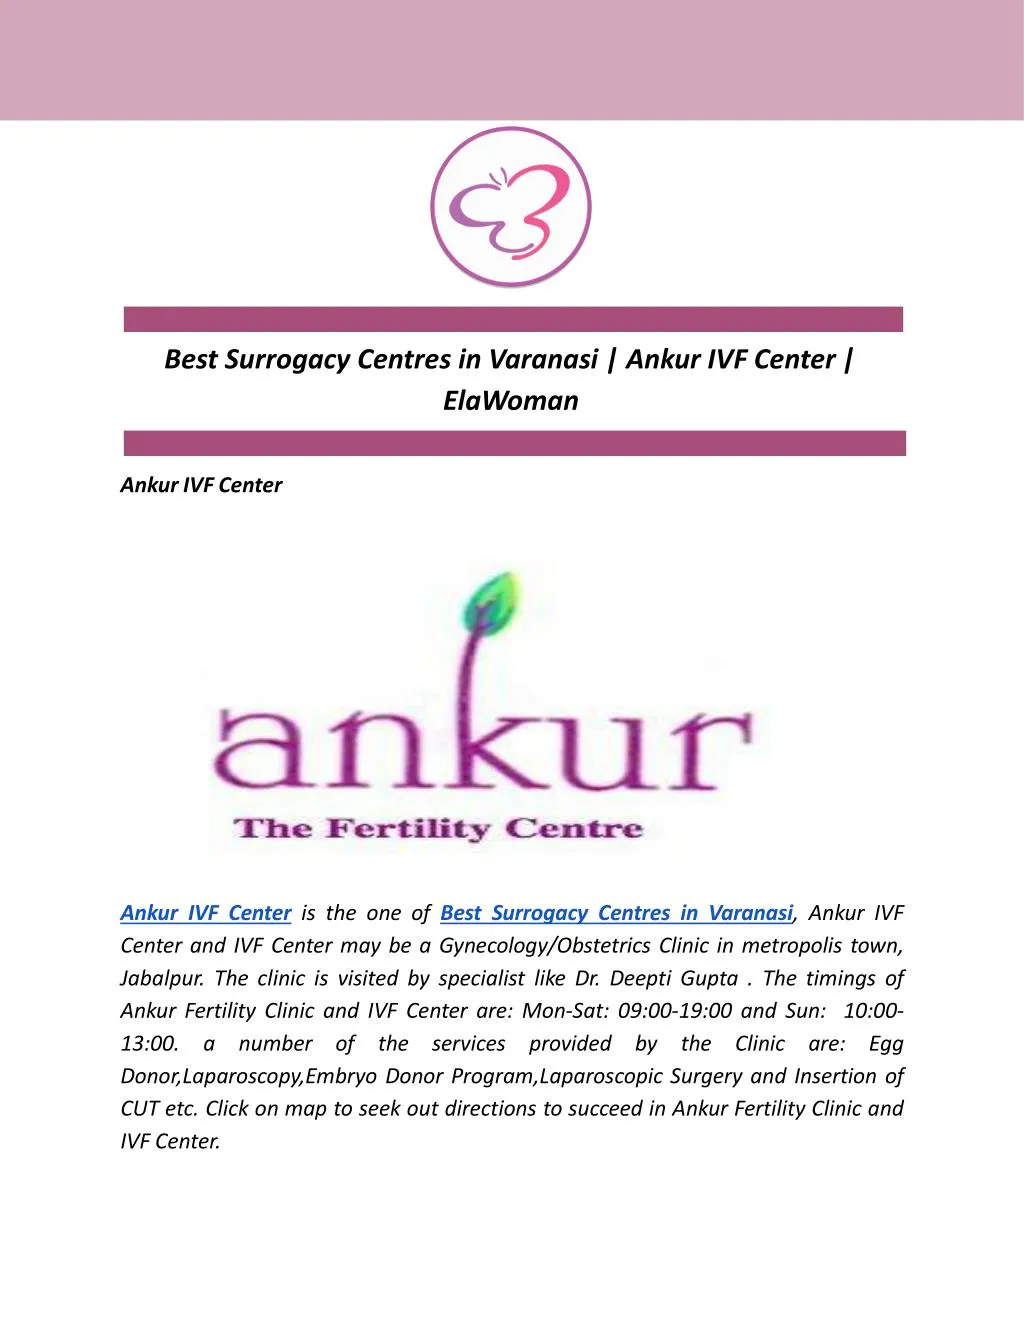 best surrogacy centres in varanasi ankur